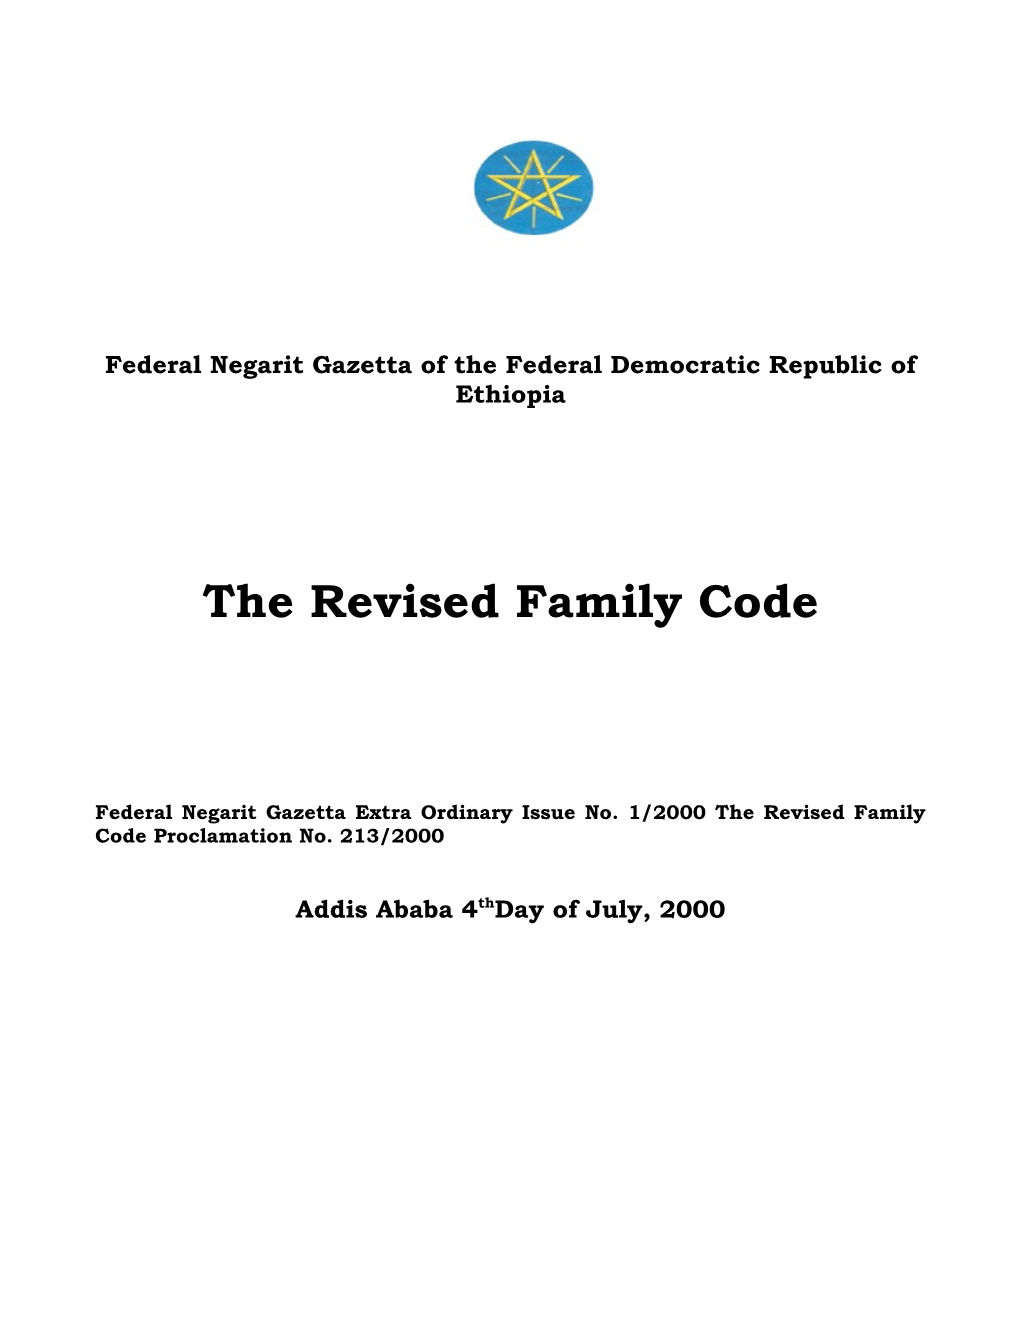 The Revised Family Code (2000) Federal Democratic Republic of Ethiopia